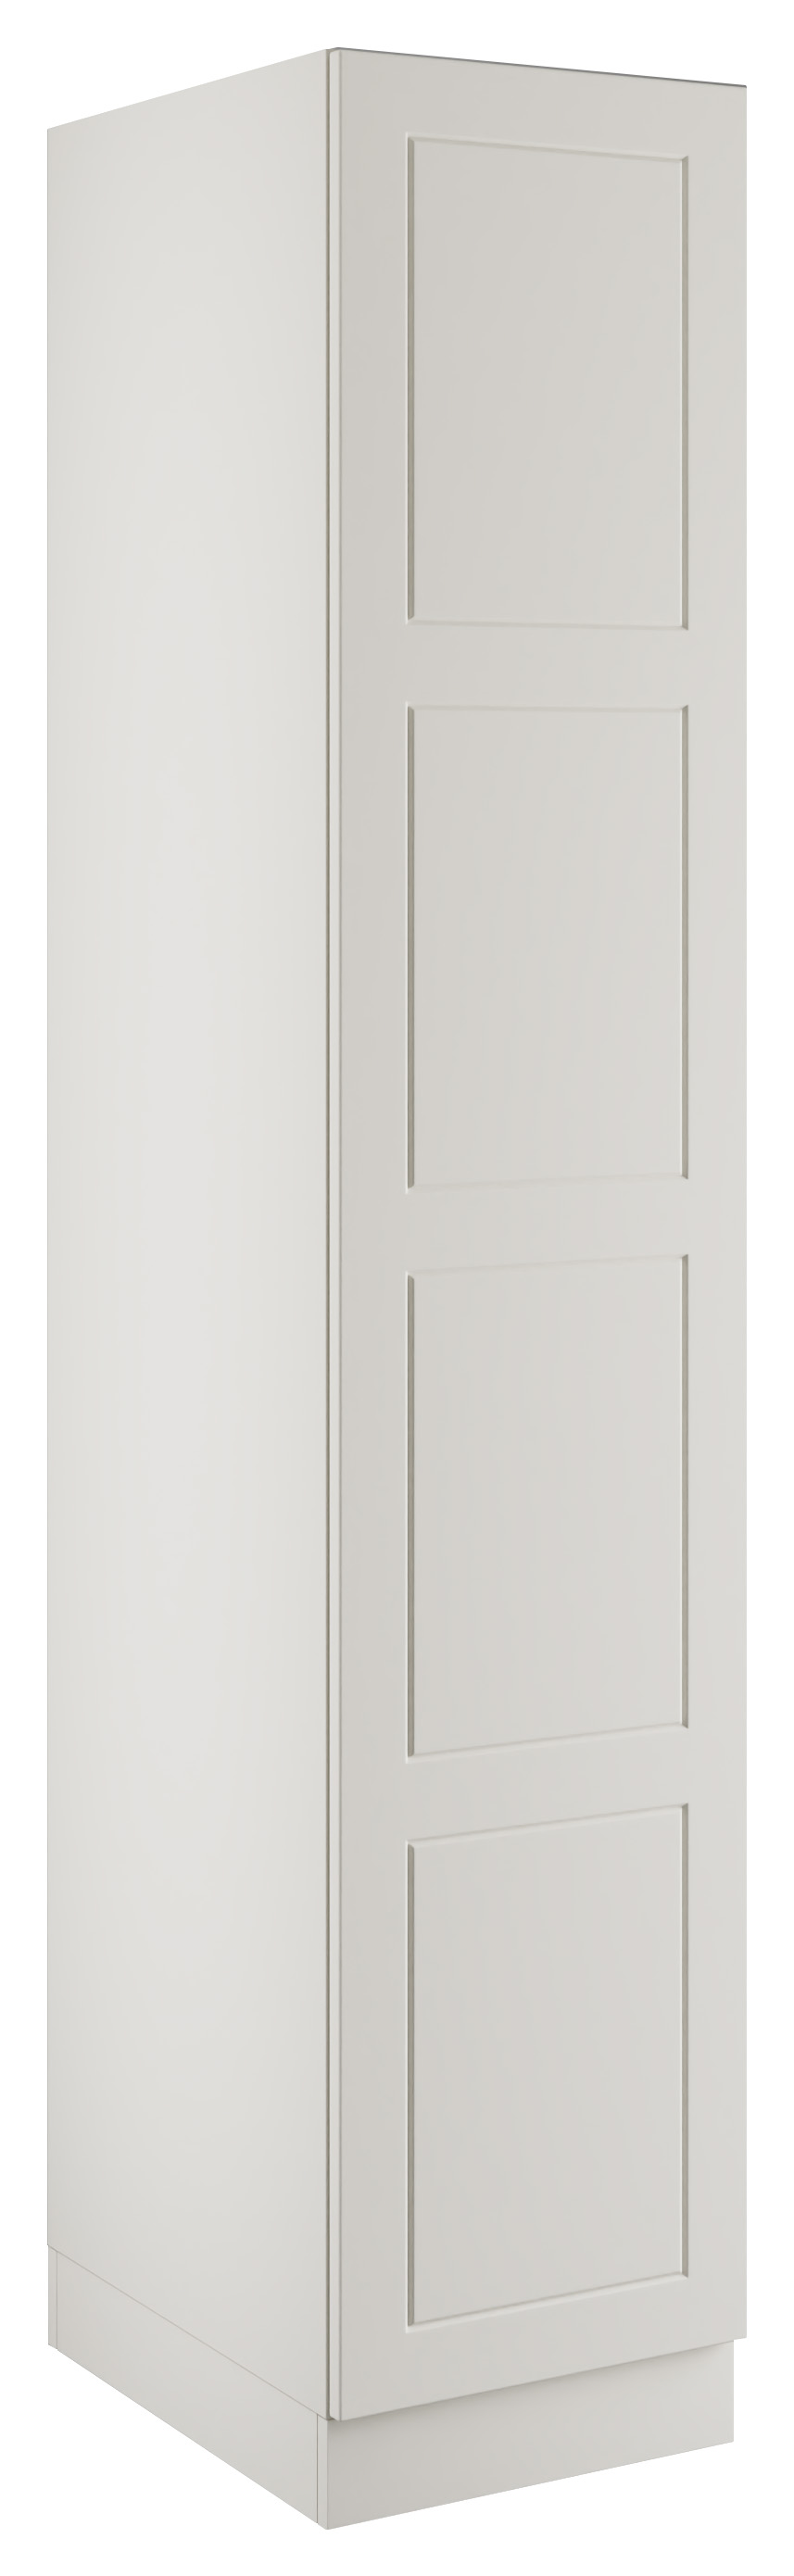 Bramham White Single Wardrobe with Single Rail - 450 x 2260 x 608mm